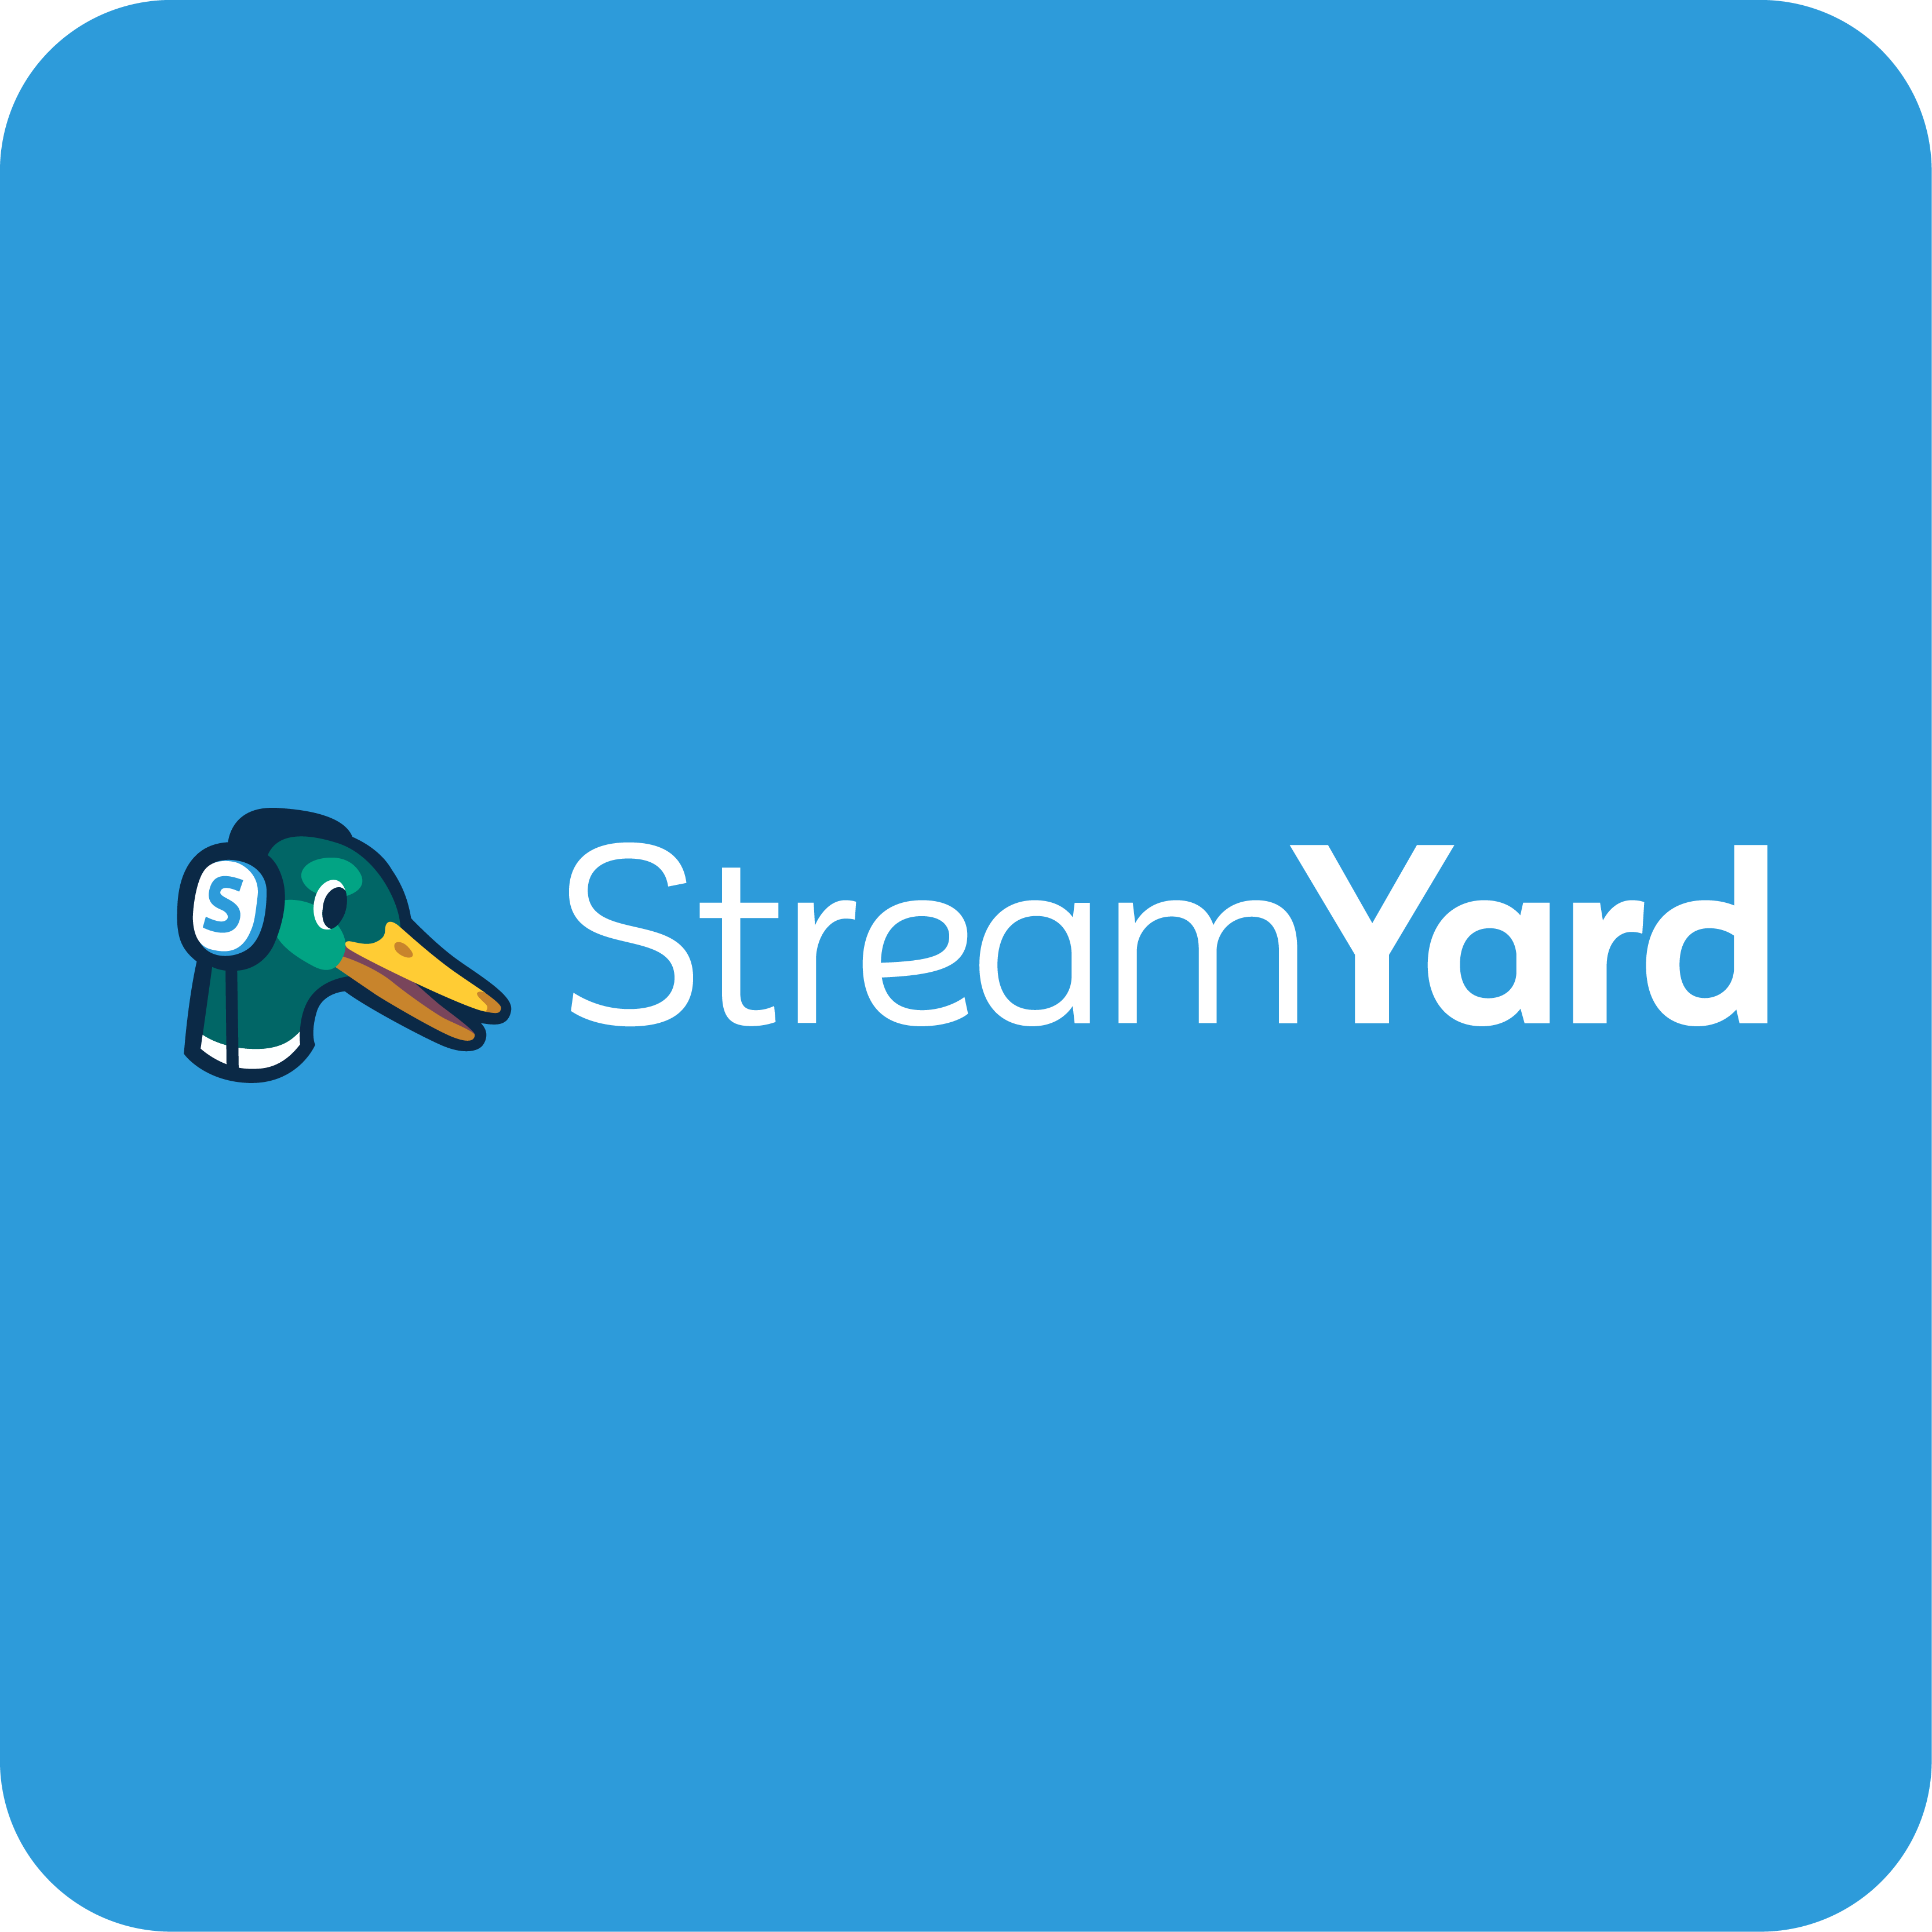 Streamyard